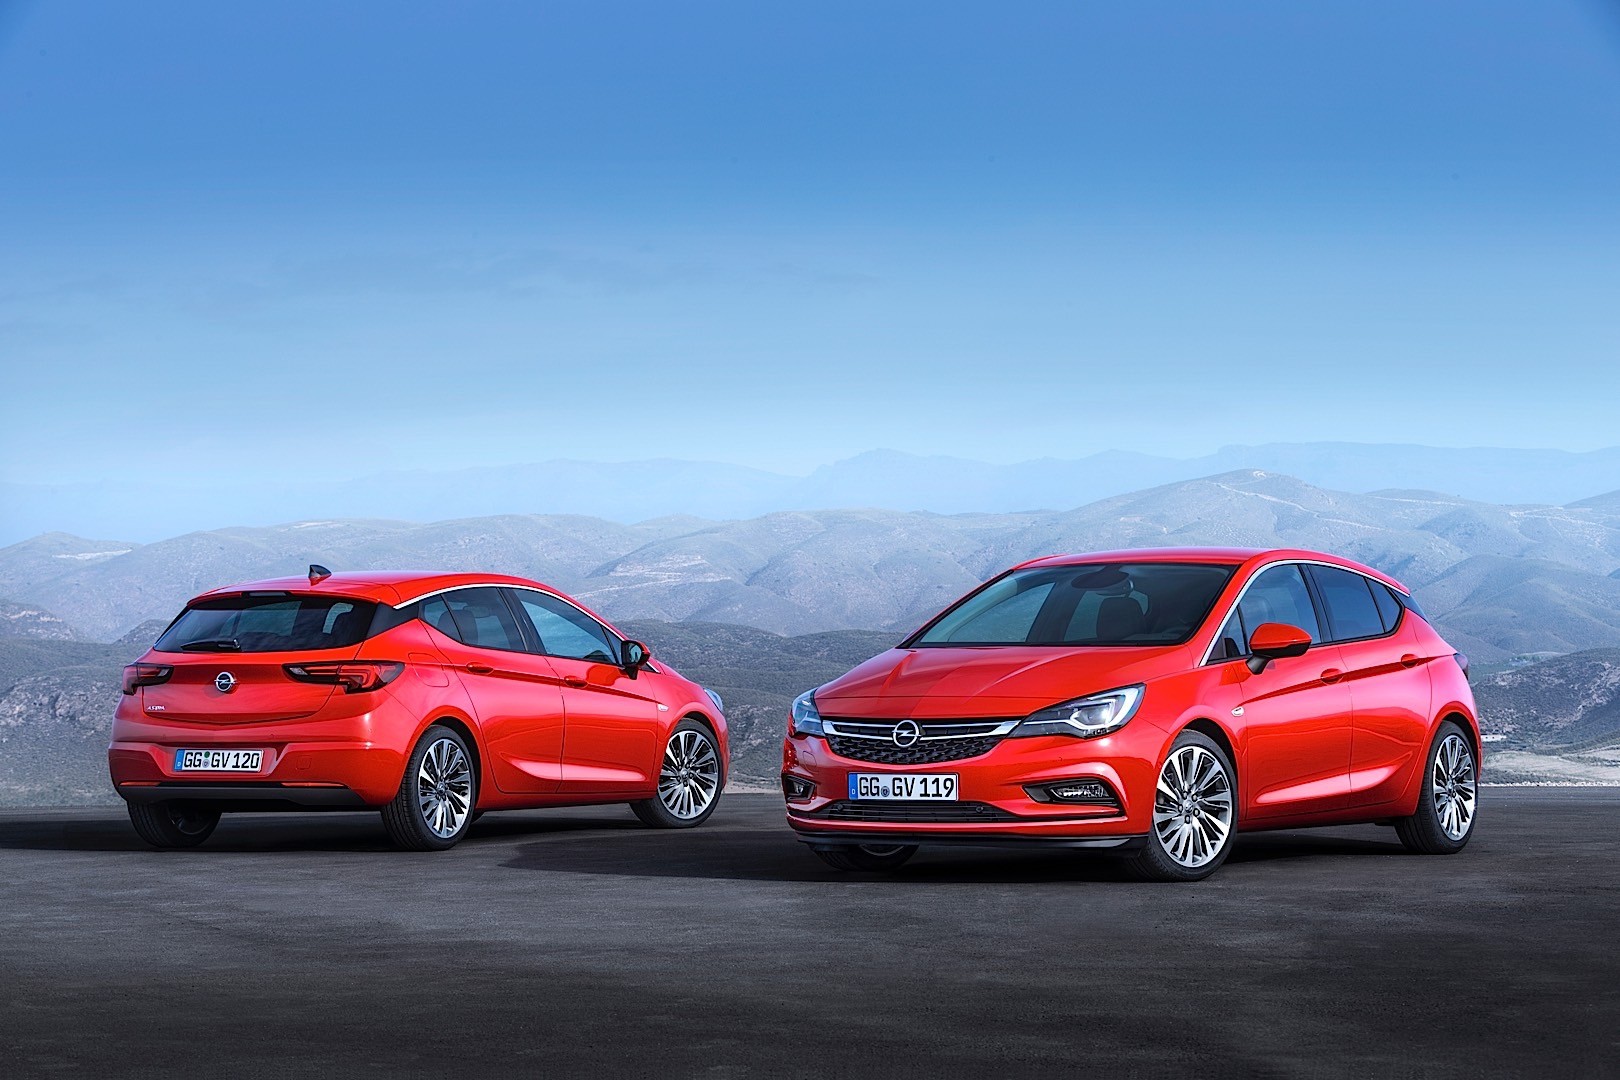 Reduced dimensions, great progress: Opel astra K